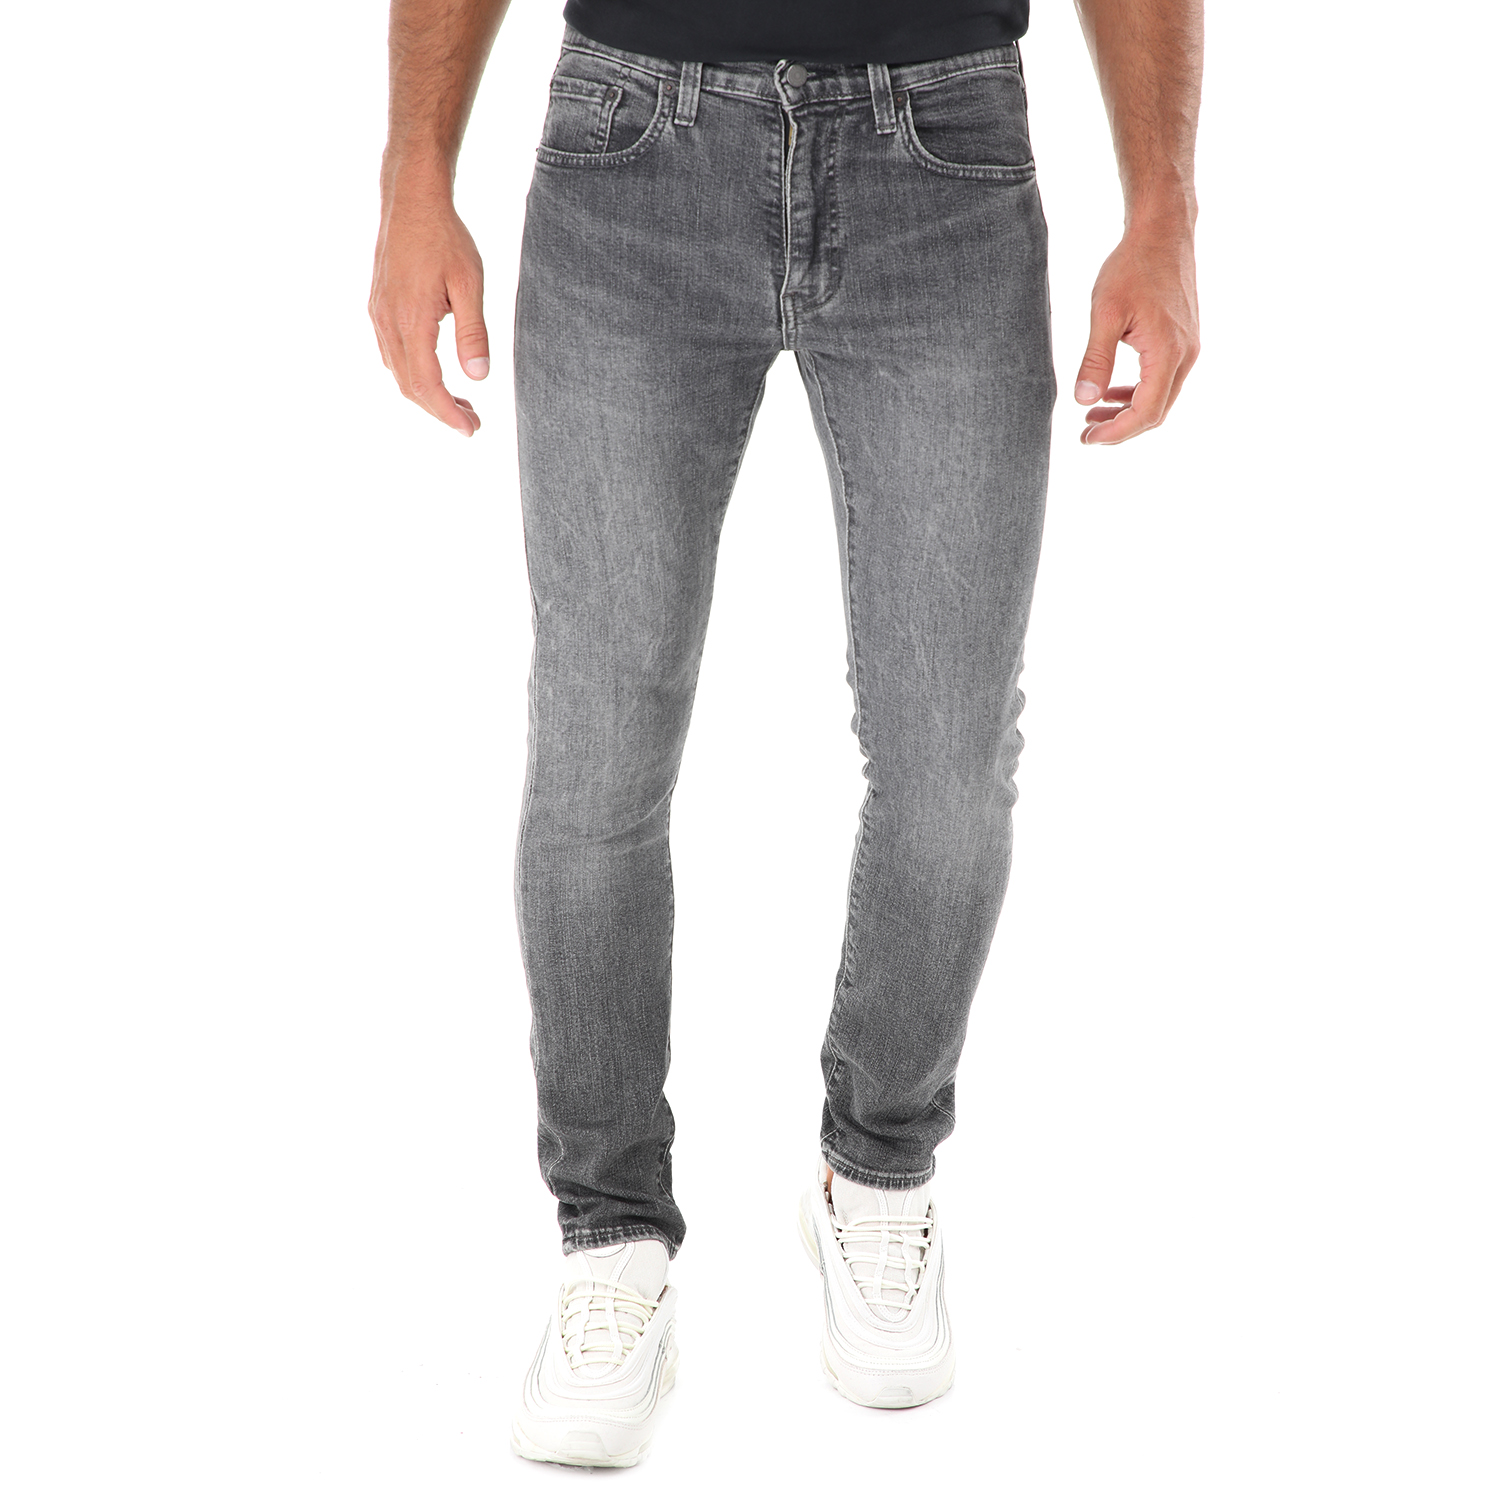 LEVI'S - Ανδρικό jean παντελόνι LEVI'S 519 EXTREME SKINNY ALBANY ADV γκρι Ανδρικά/Ρούχα/Τζίν/Skinny